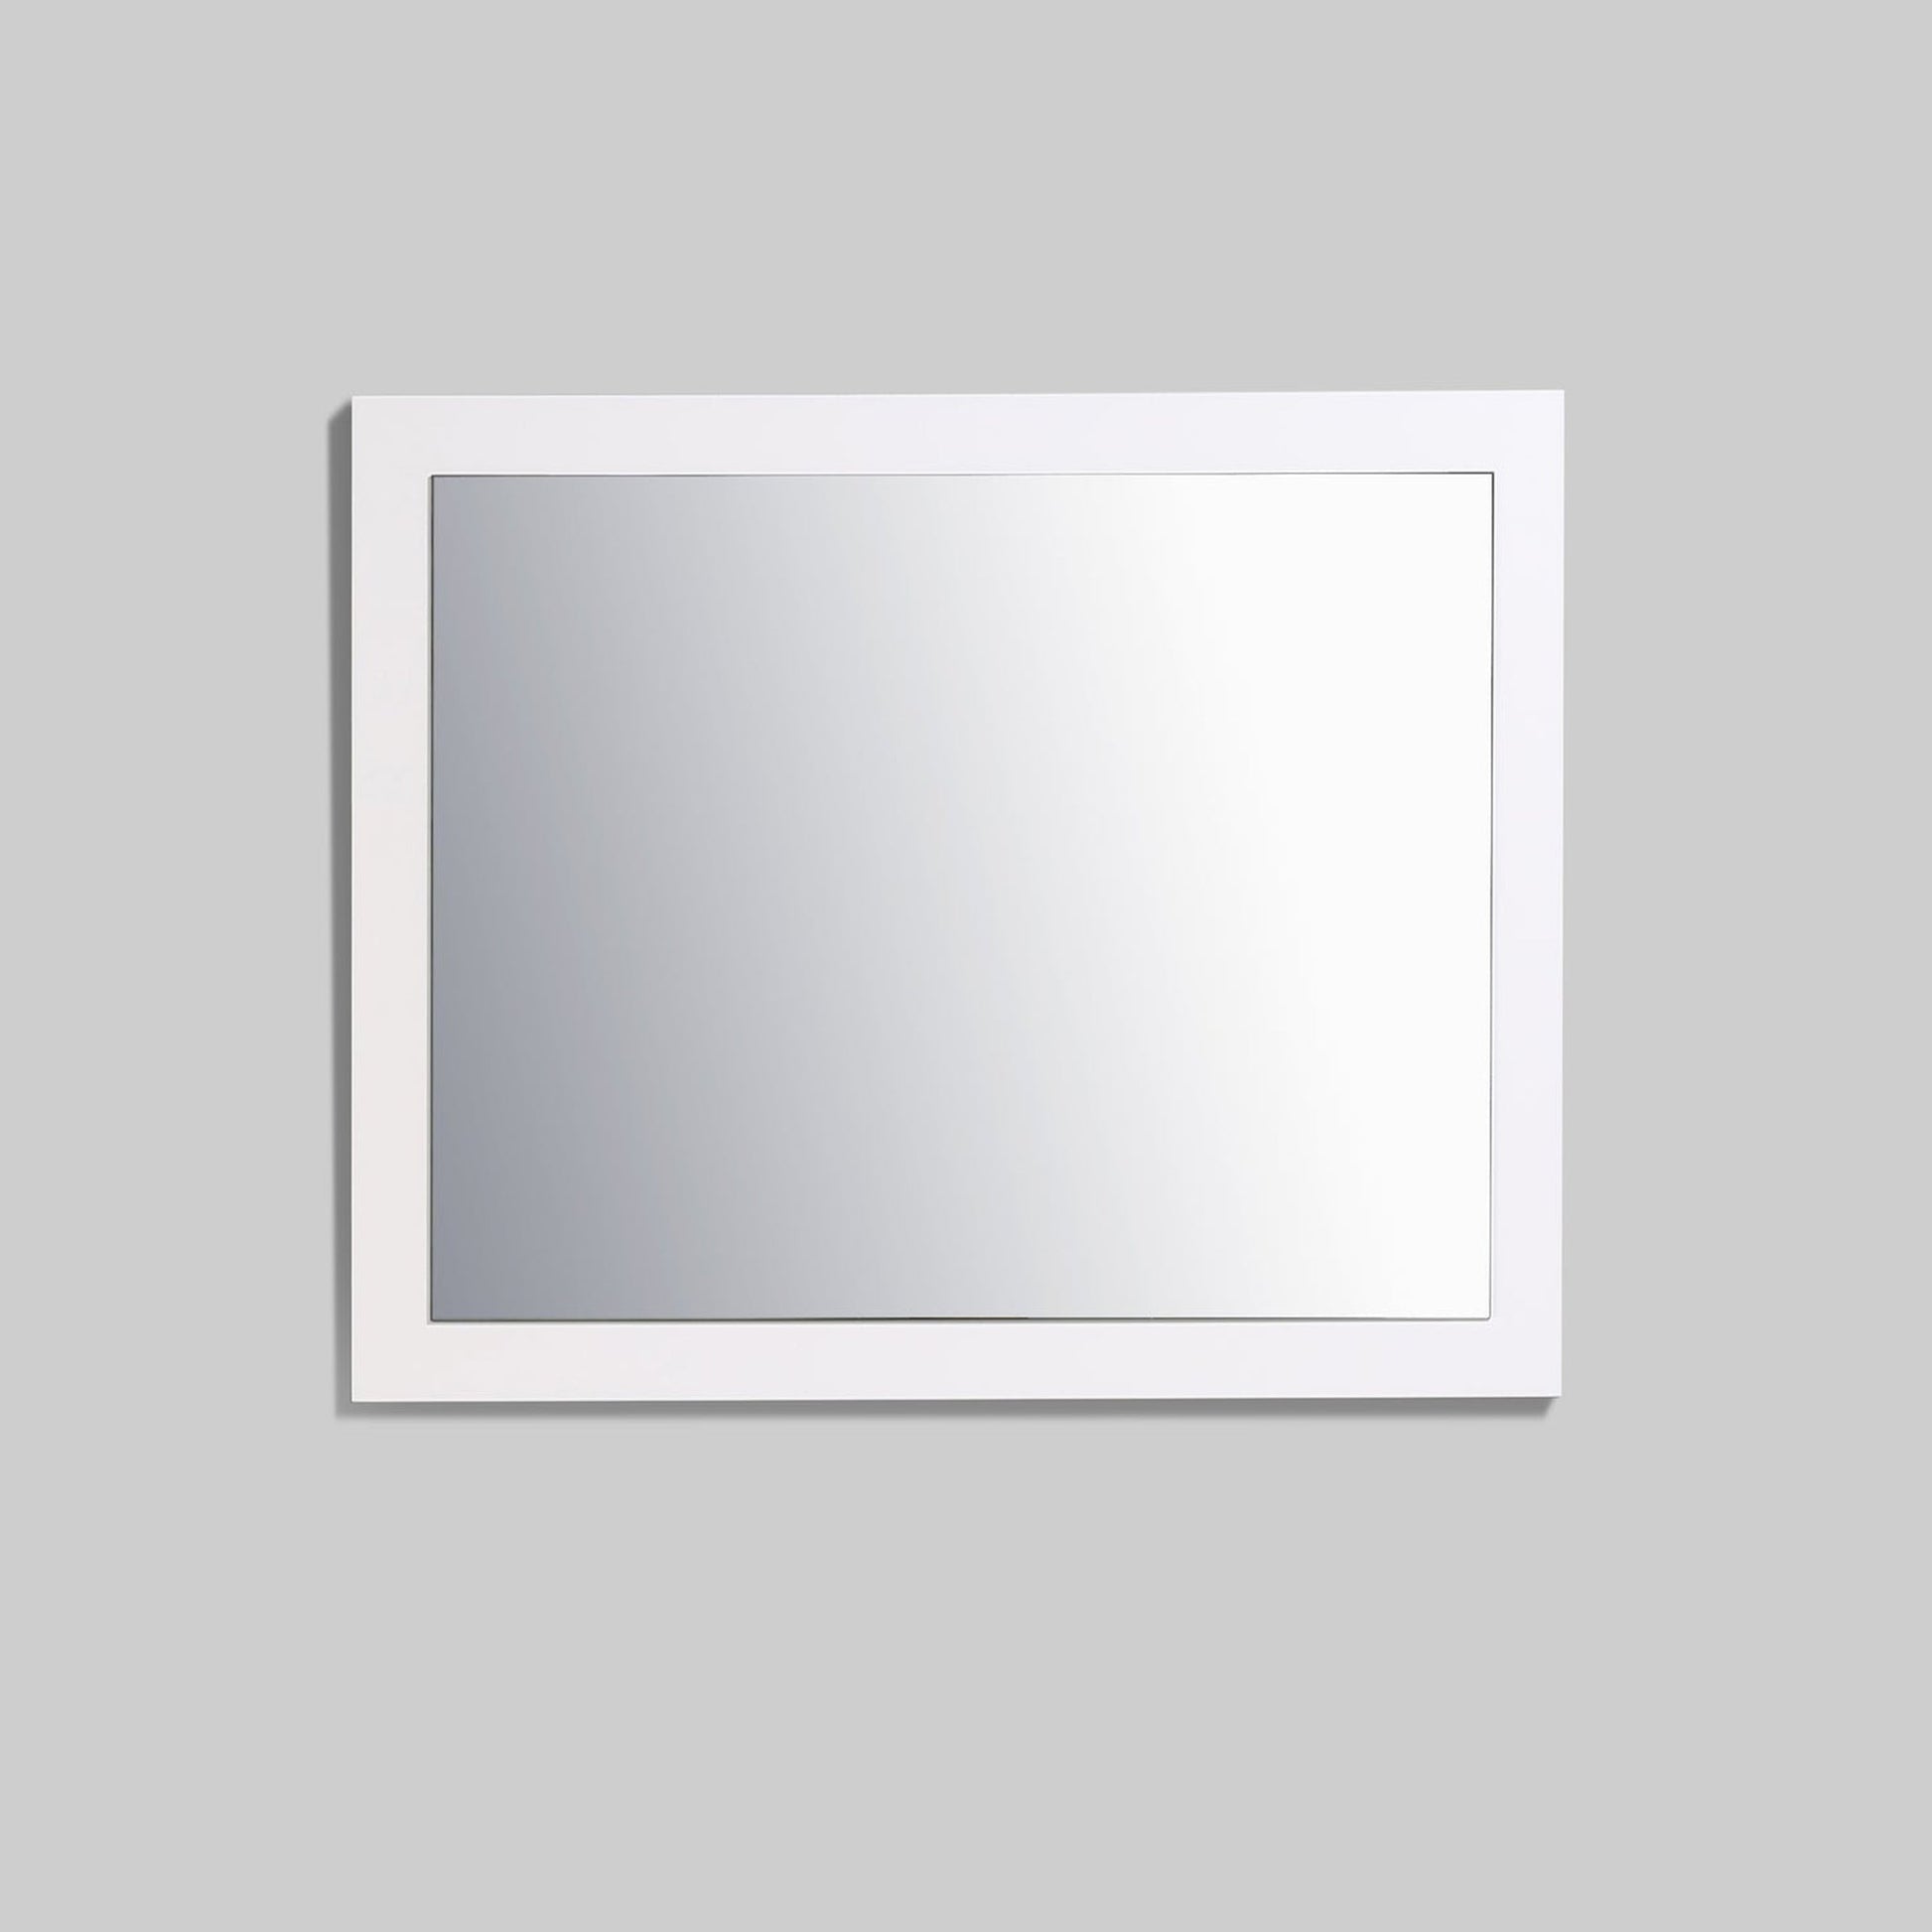 Eviva Sun 24" x 30" Glossy White Framed Bathroom Wall-Mounted Mirror